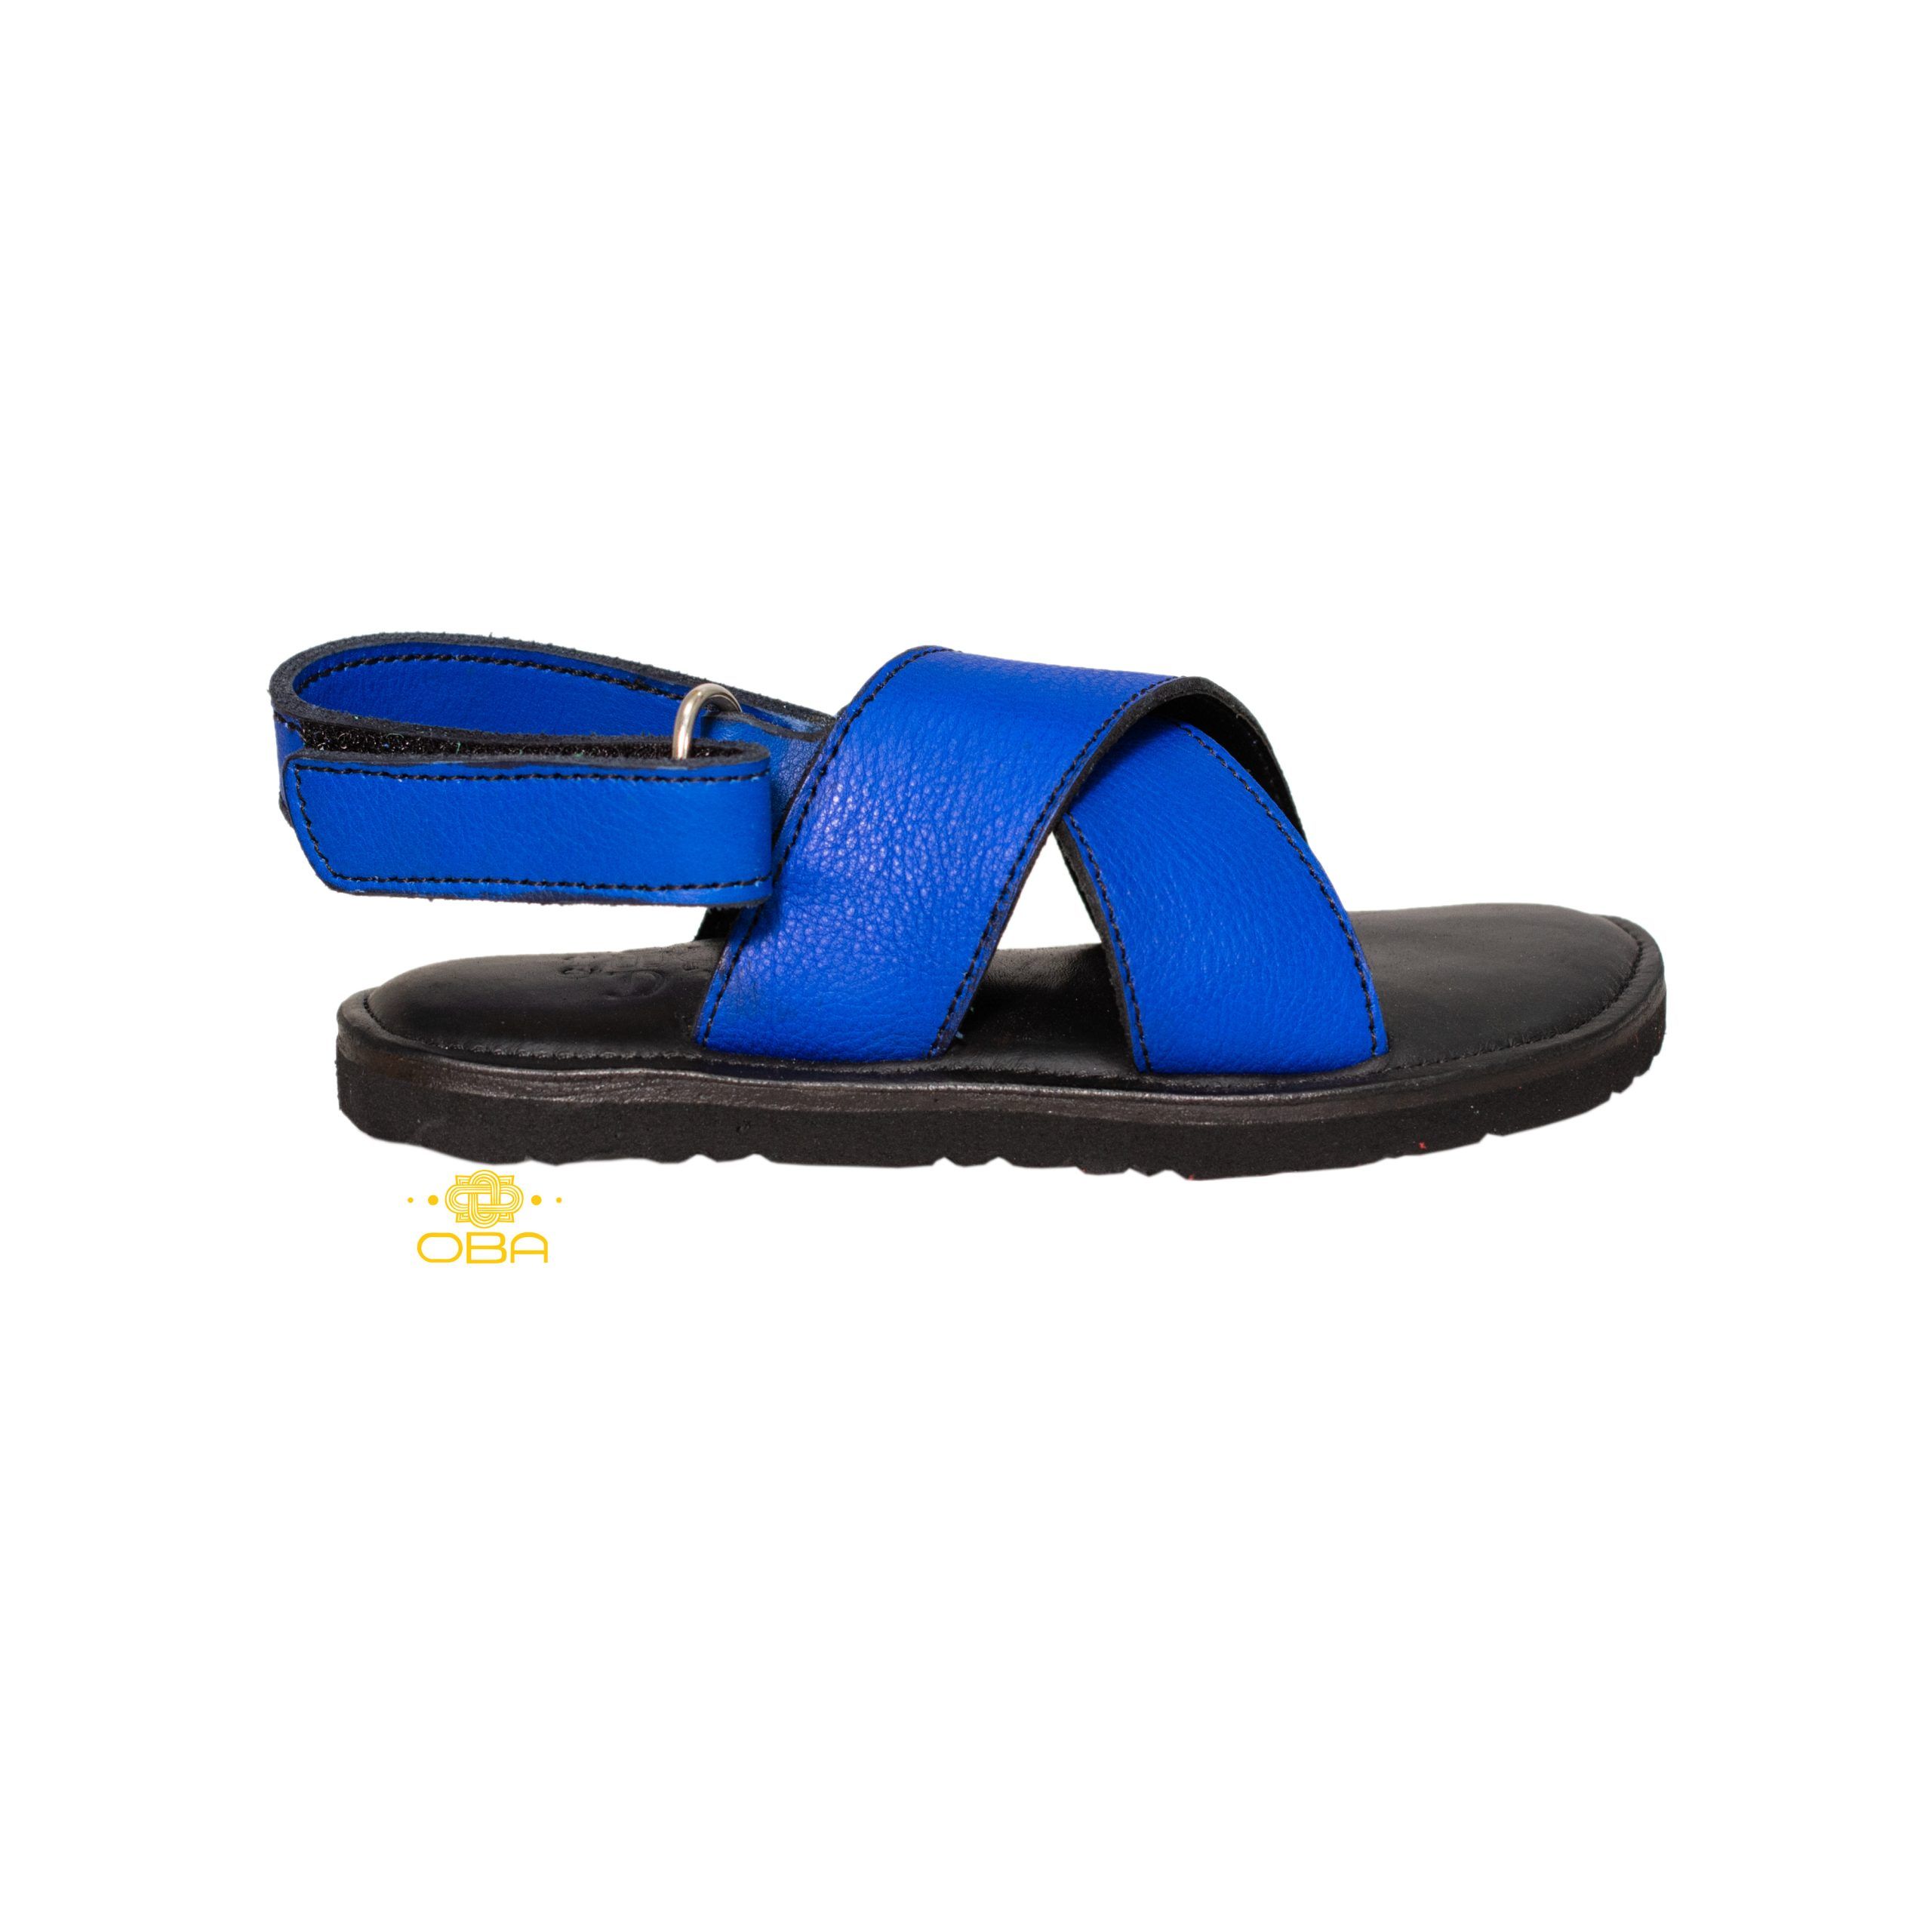 OBA 'Chima' kiddies leather sandal blue